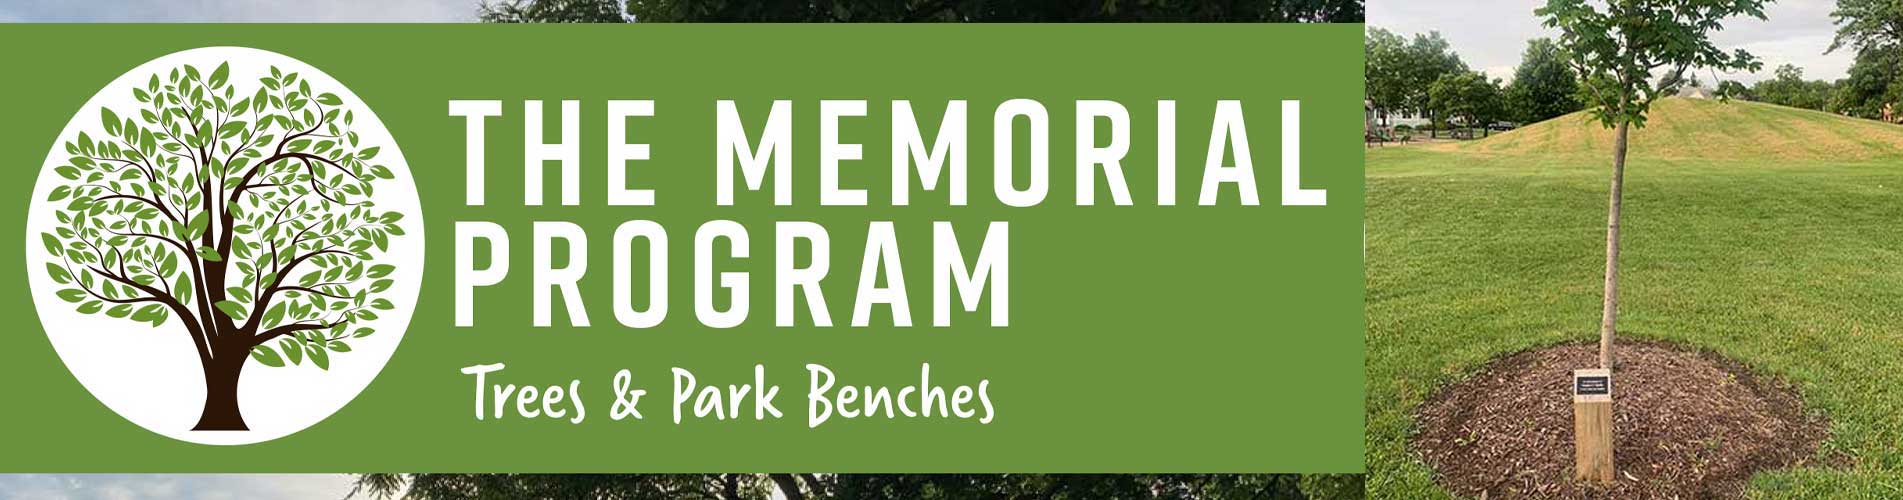 Tree/Bench Memorial Program